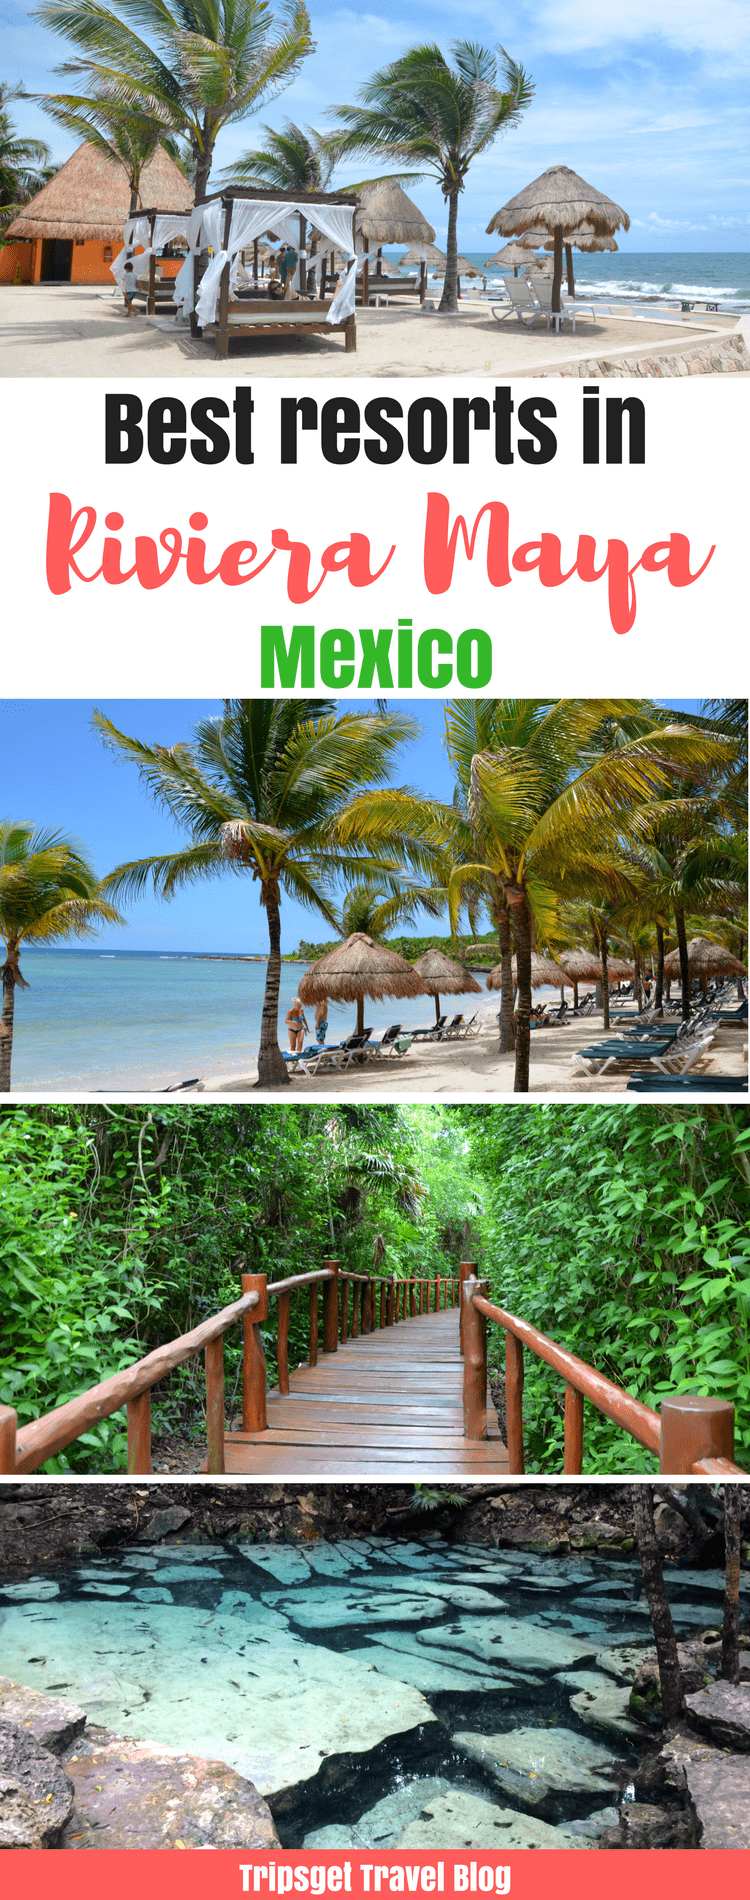 Best hotels in Riviera Maya: guide to the resorts in Riviera Maya, Mexico. Grand Palladium, Secrets, Unico, Hard Rock Hotel Riviera Maya. Where to stay in Riviera Maya. Puerto Morelos, Akumal, Playa del Carmen, Tulum.